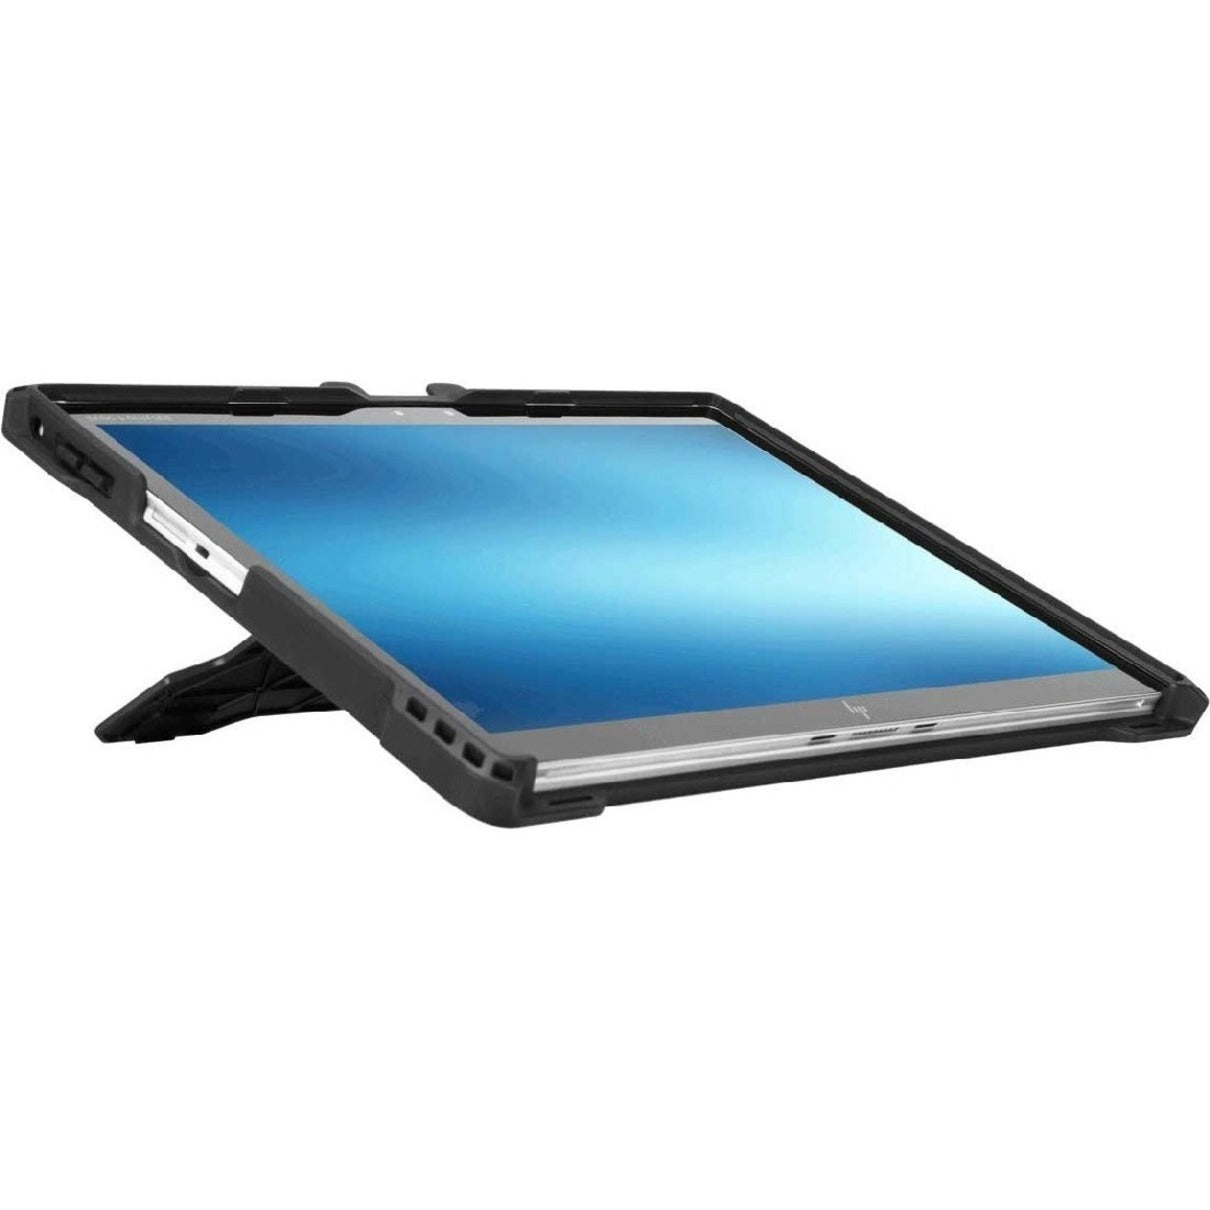 Targus THZ790GL Custodia per Tablet di Grado Commerciale per HP Elite x2 1013 G3 Custodia Robusta per Pennino e Tablet